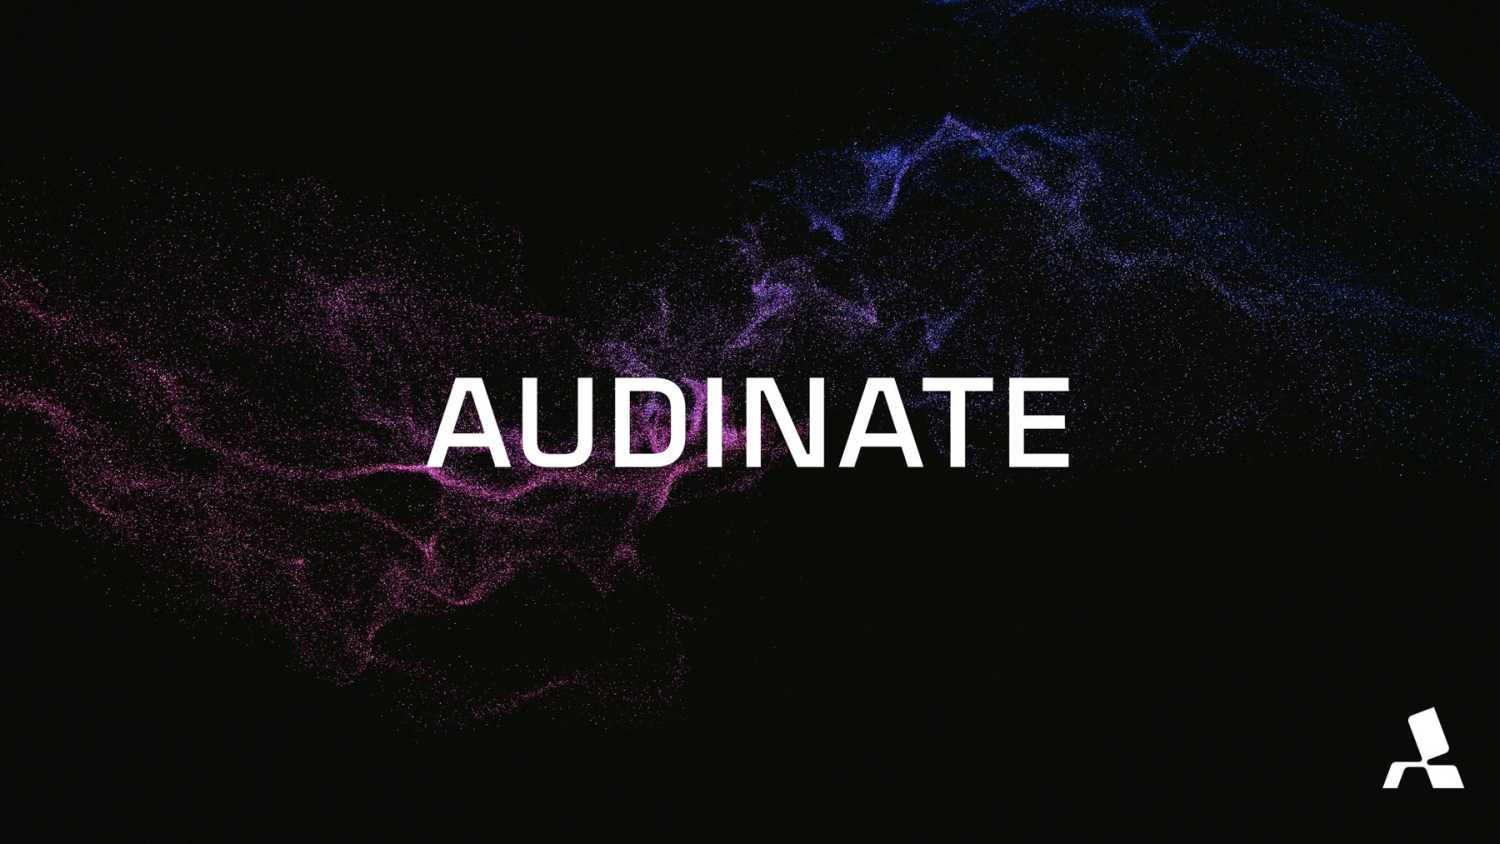 ‘Audinate has always been focused on pioneering the future of AV’